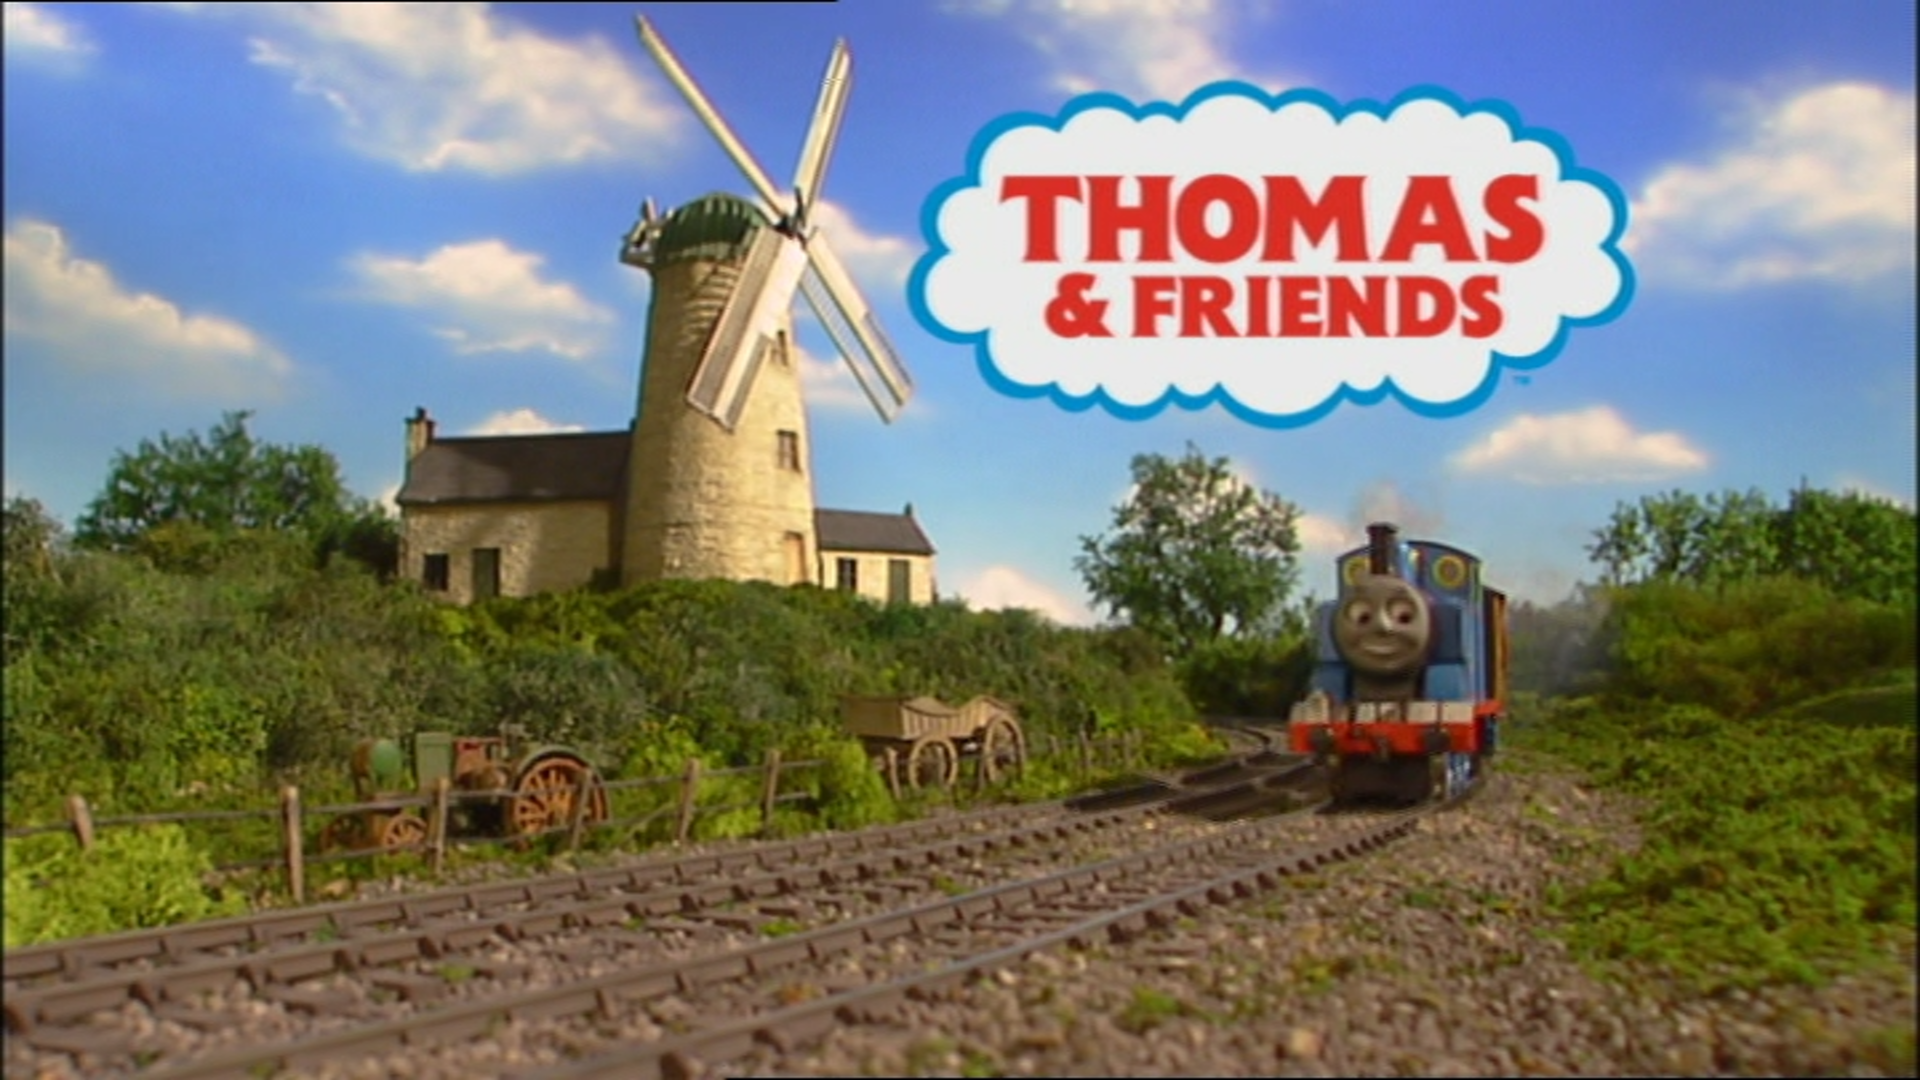 thomas and friends season 8 (dvd)